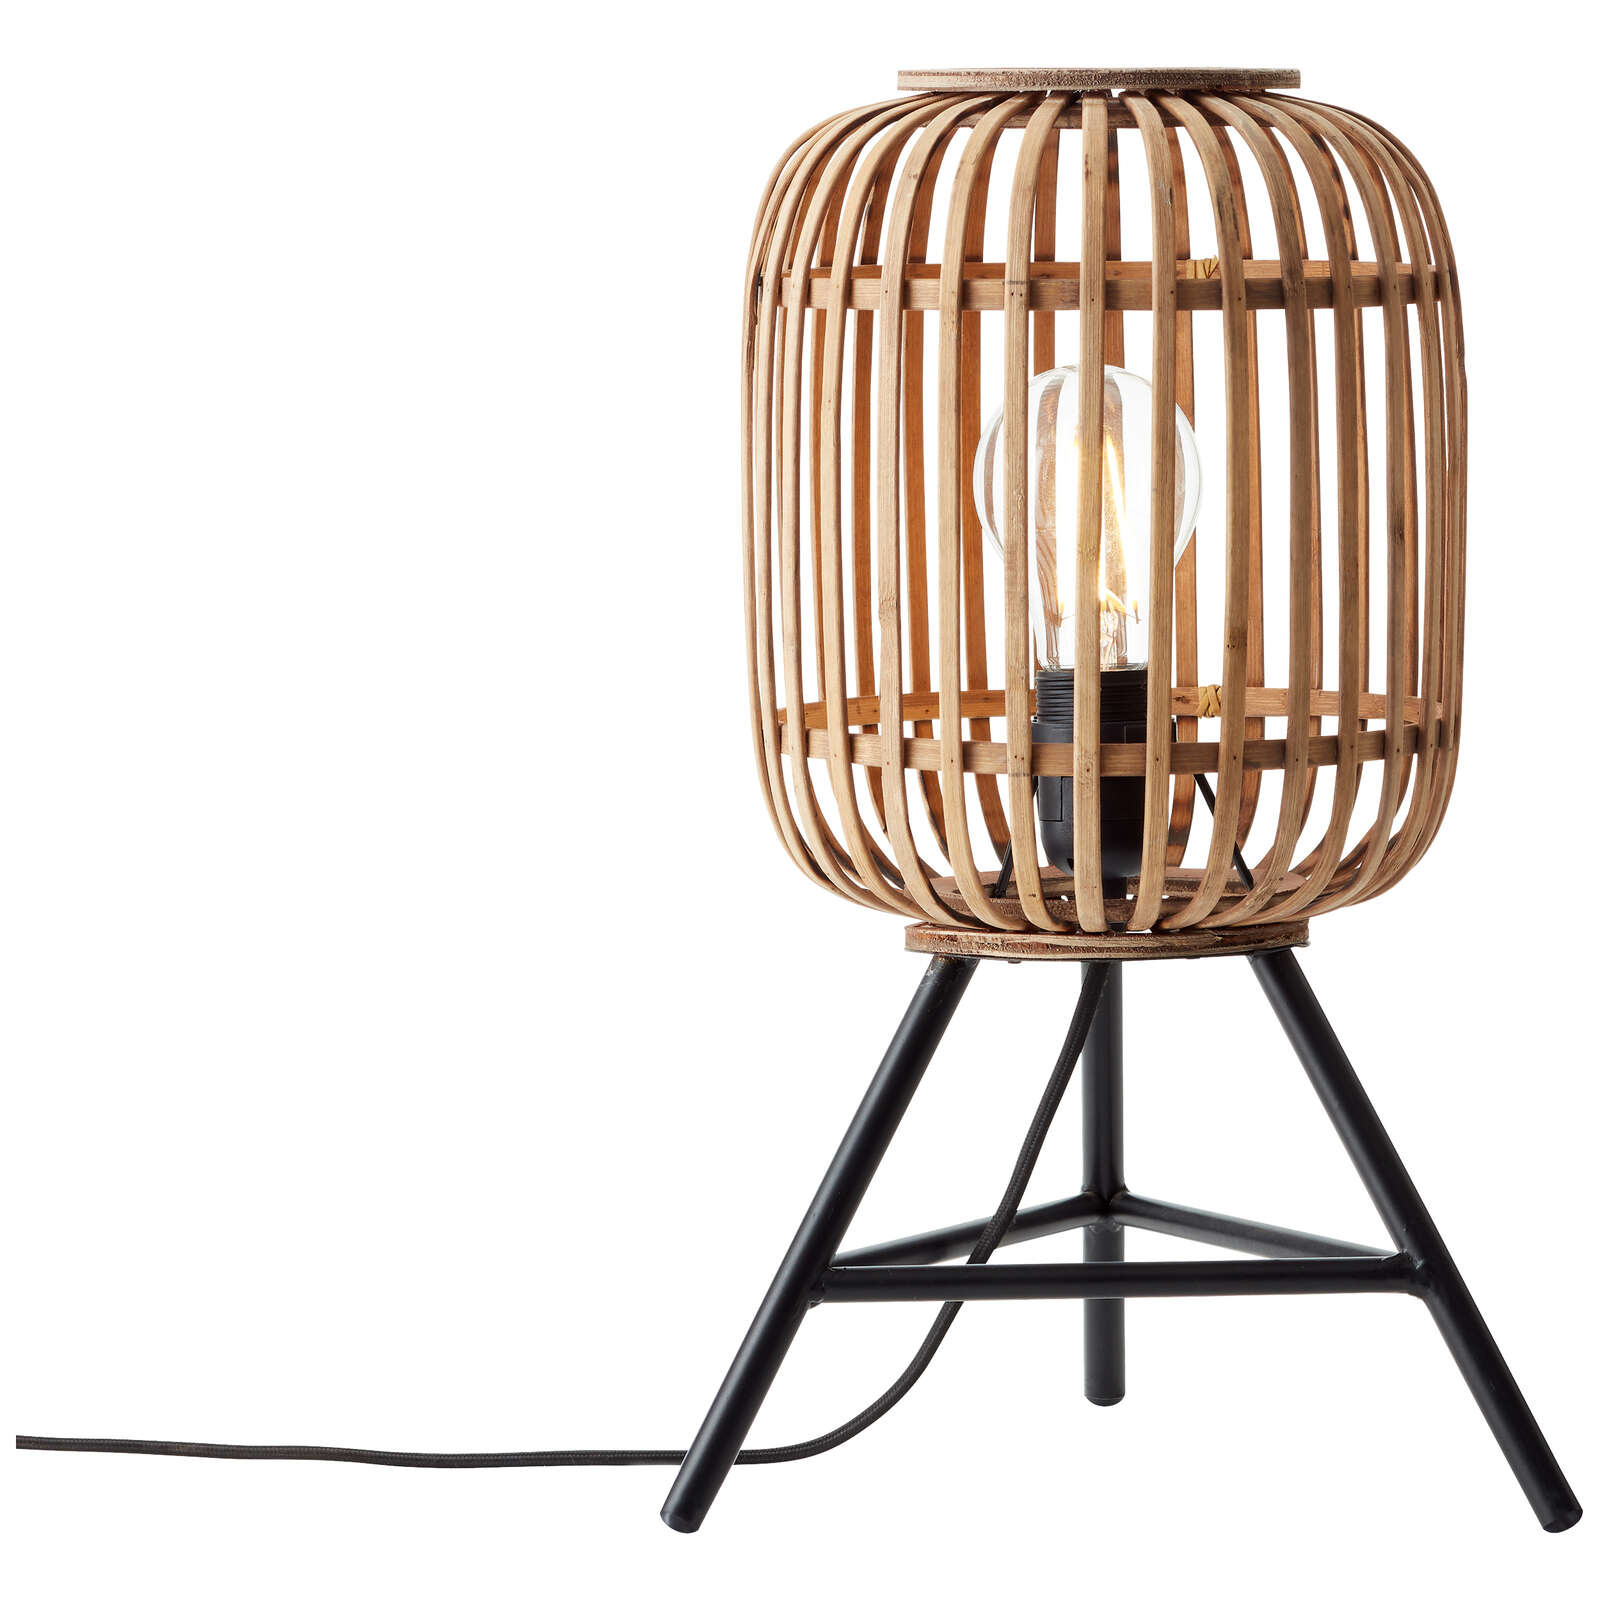             Bamboo table lamp - Willi 2 - Brown
        